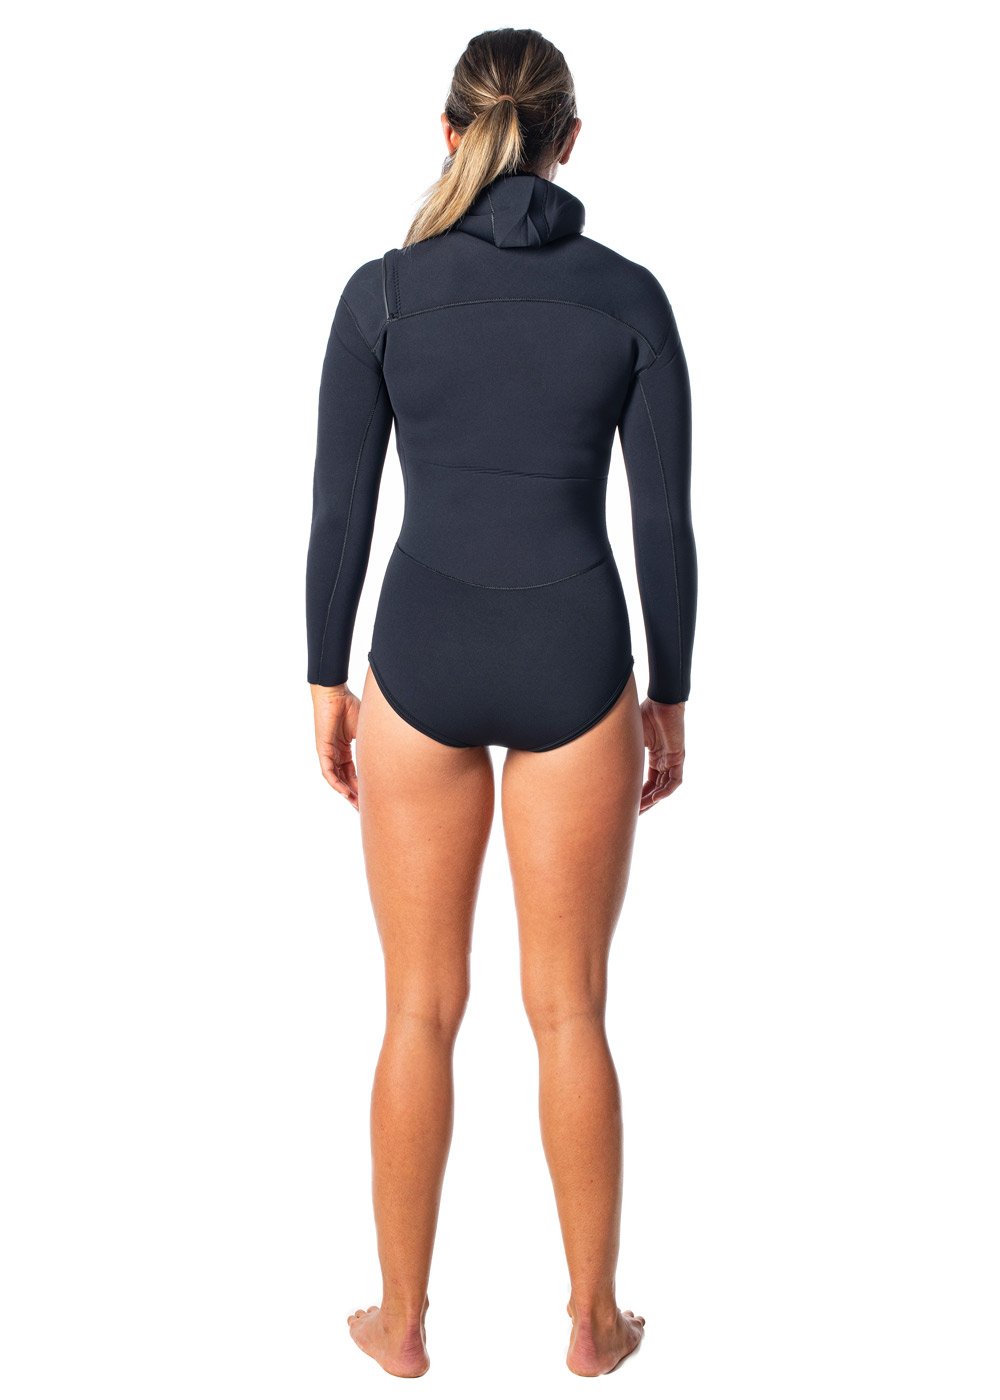 SALT Womens 2.5mm Long Sleeve Hooded Spring Suit Wetsuit